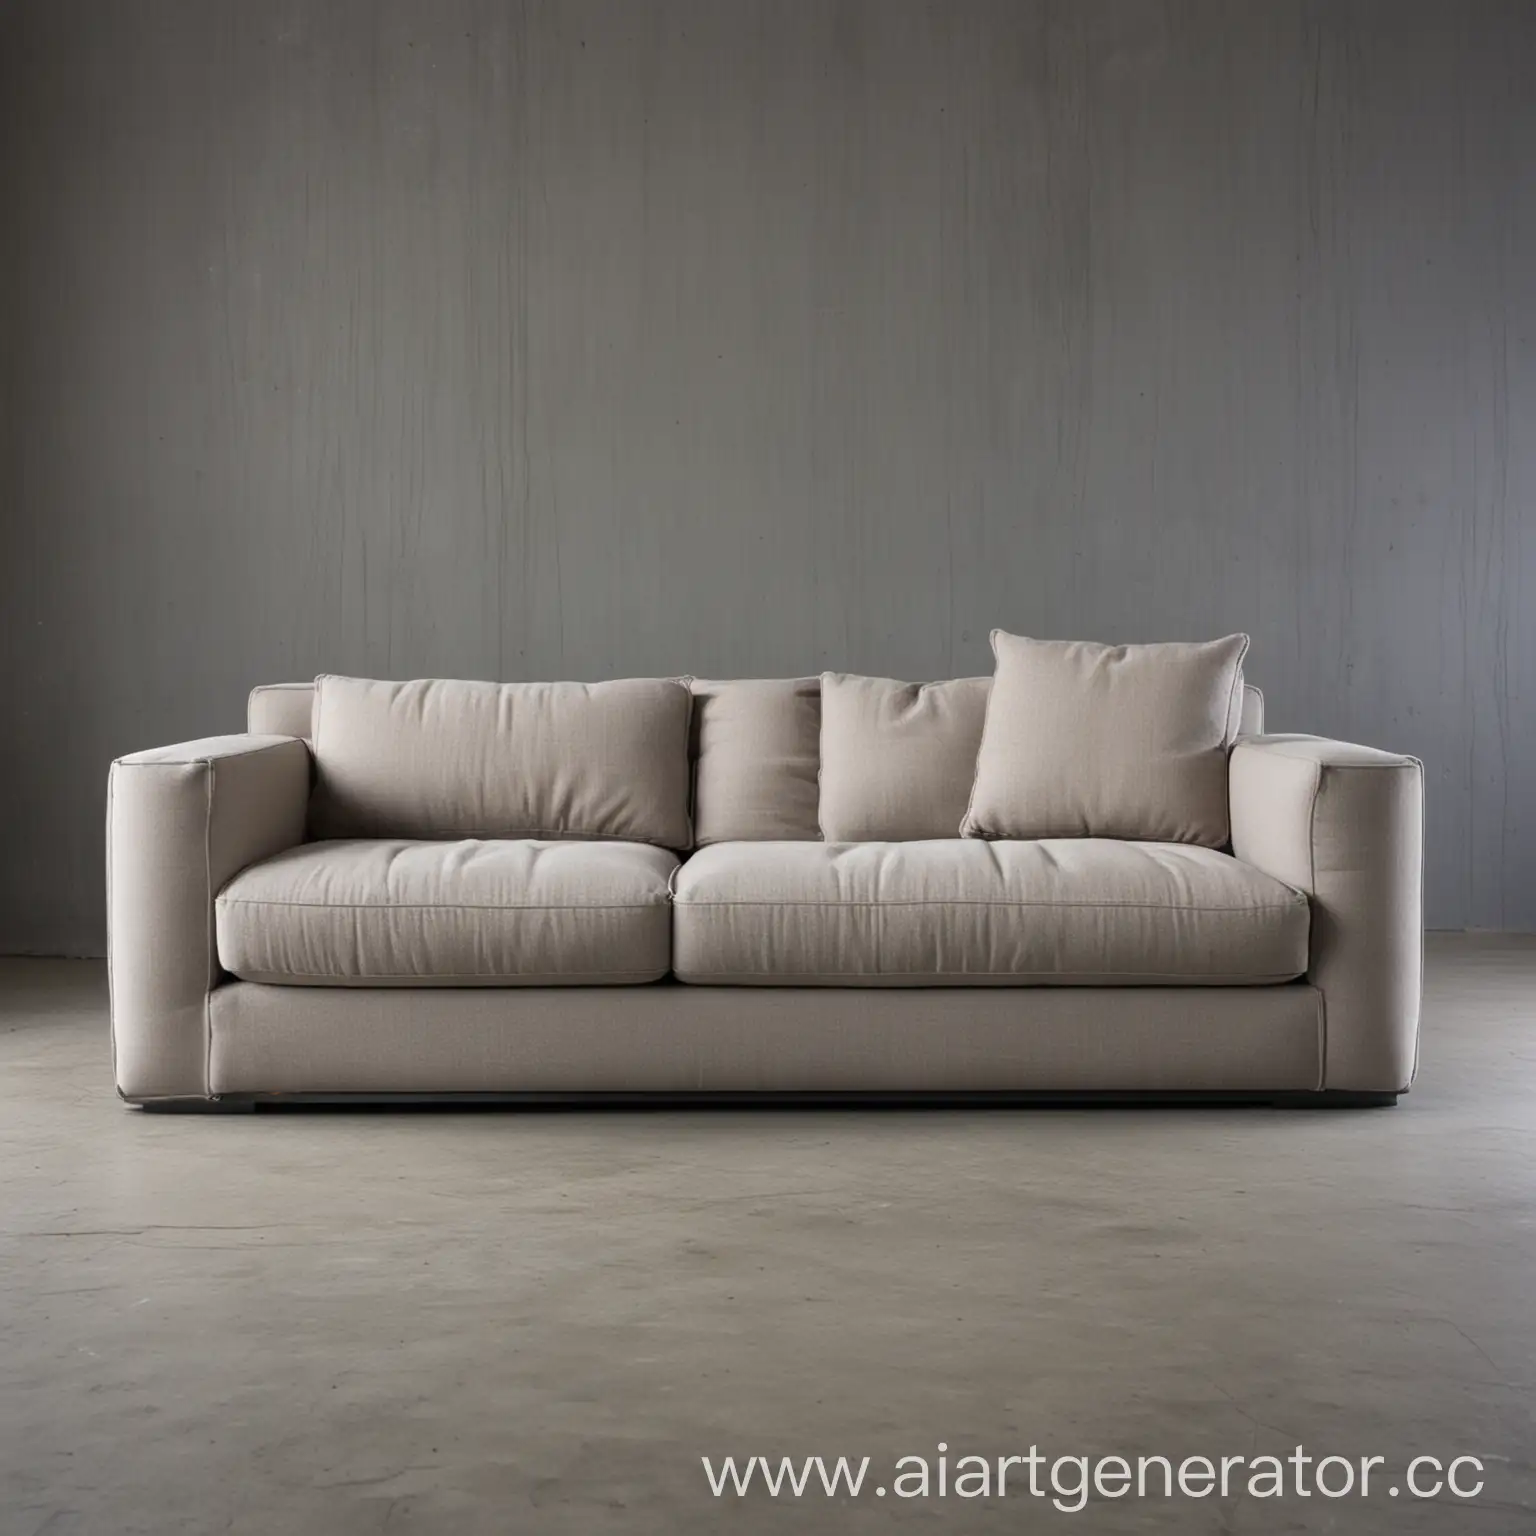 Contemporary-Living-Room-with-Modern-Sofa